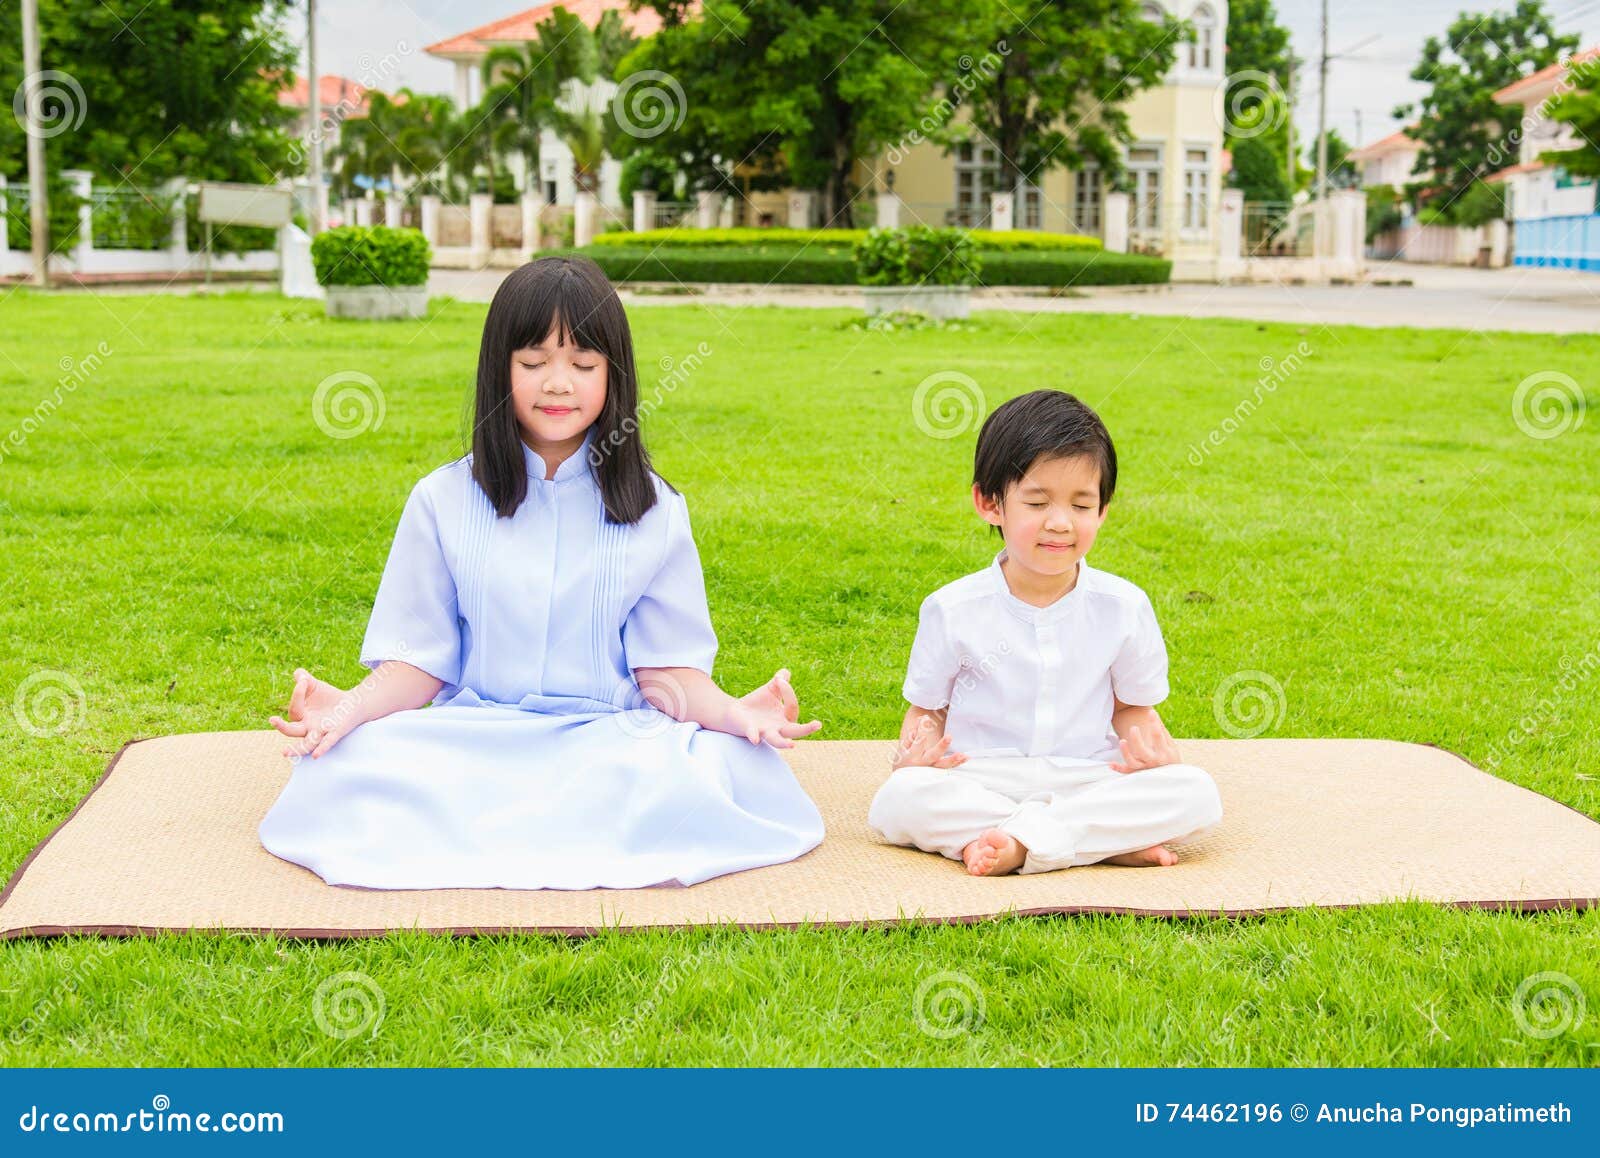 buddhist asian children